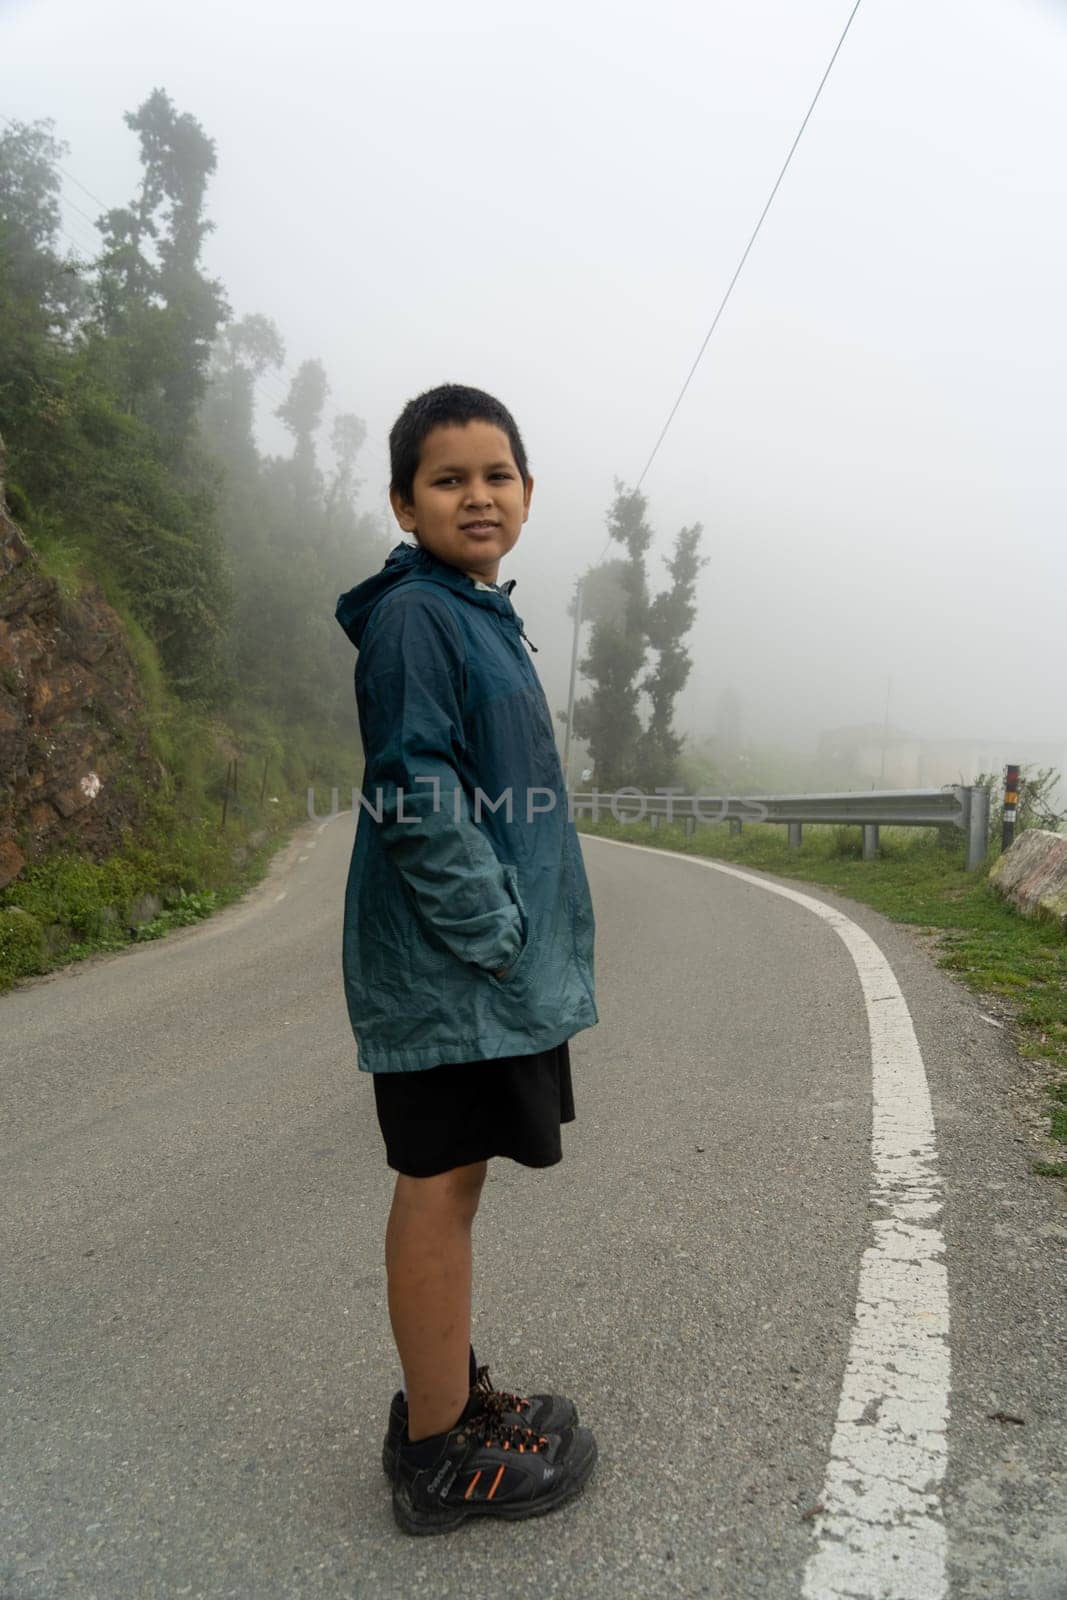 Boy's Journey Along the Roadside in Uttarakhand by stocksvids